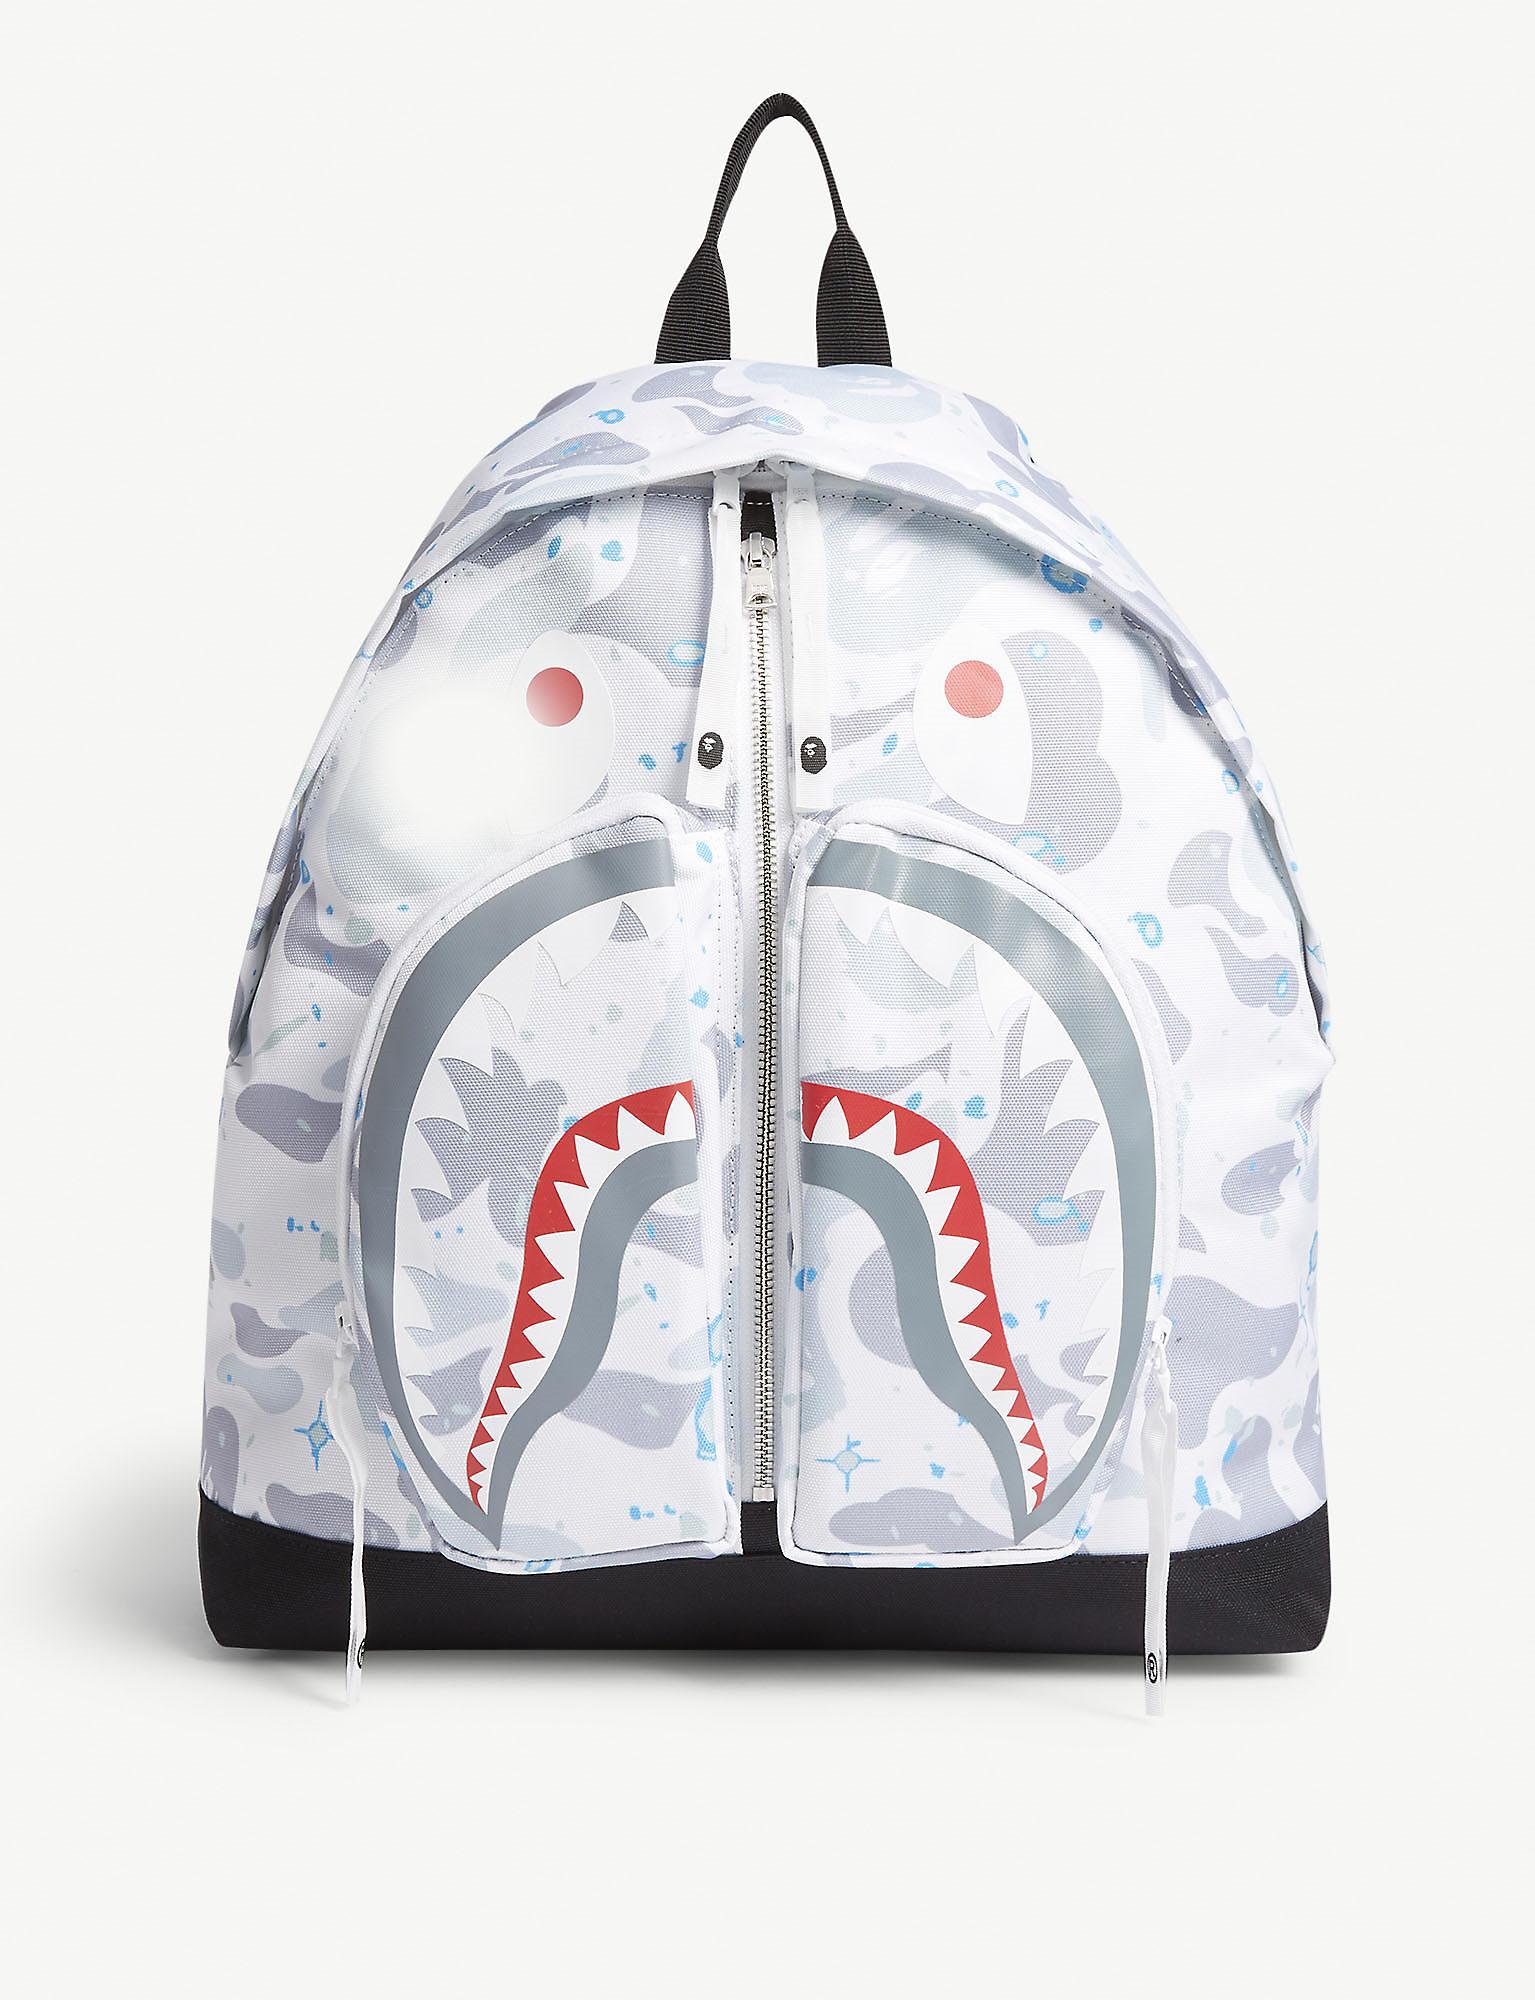 A Bathing Ape Space Shark Print Backpack in White for Men - Lyst